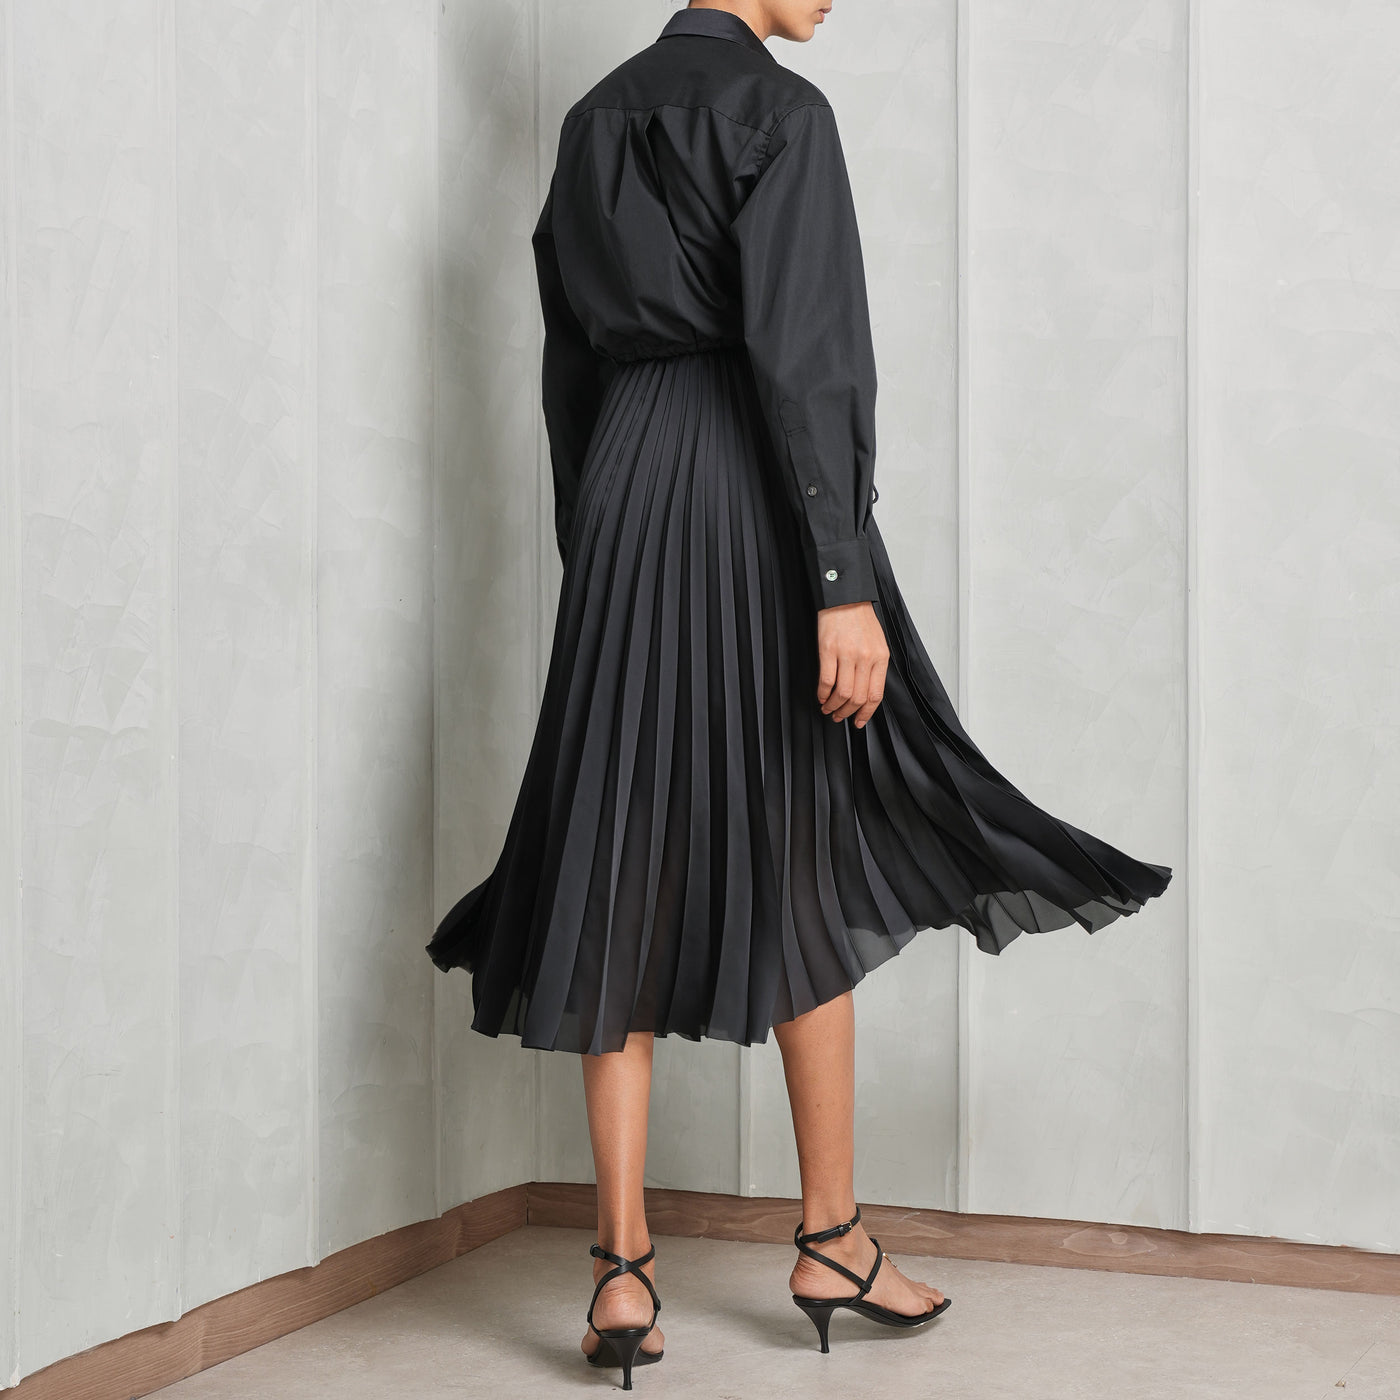 SACAI Black Midi Dress with a flared skirt & accordion pleats